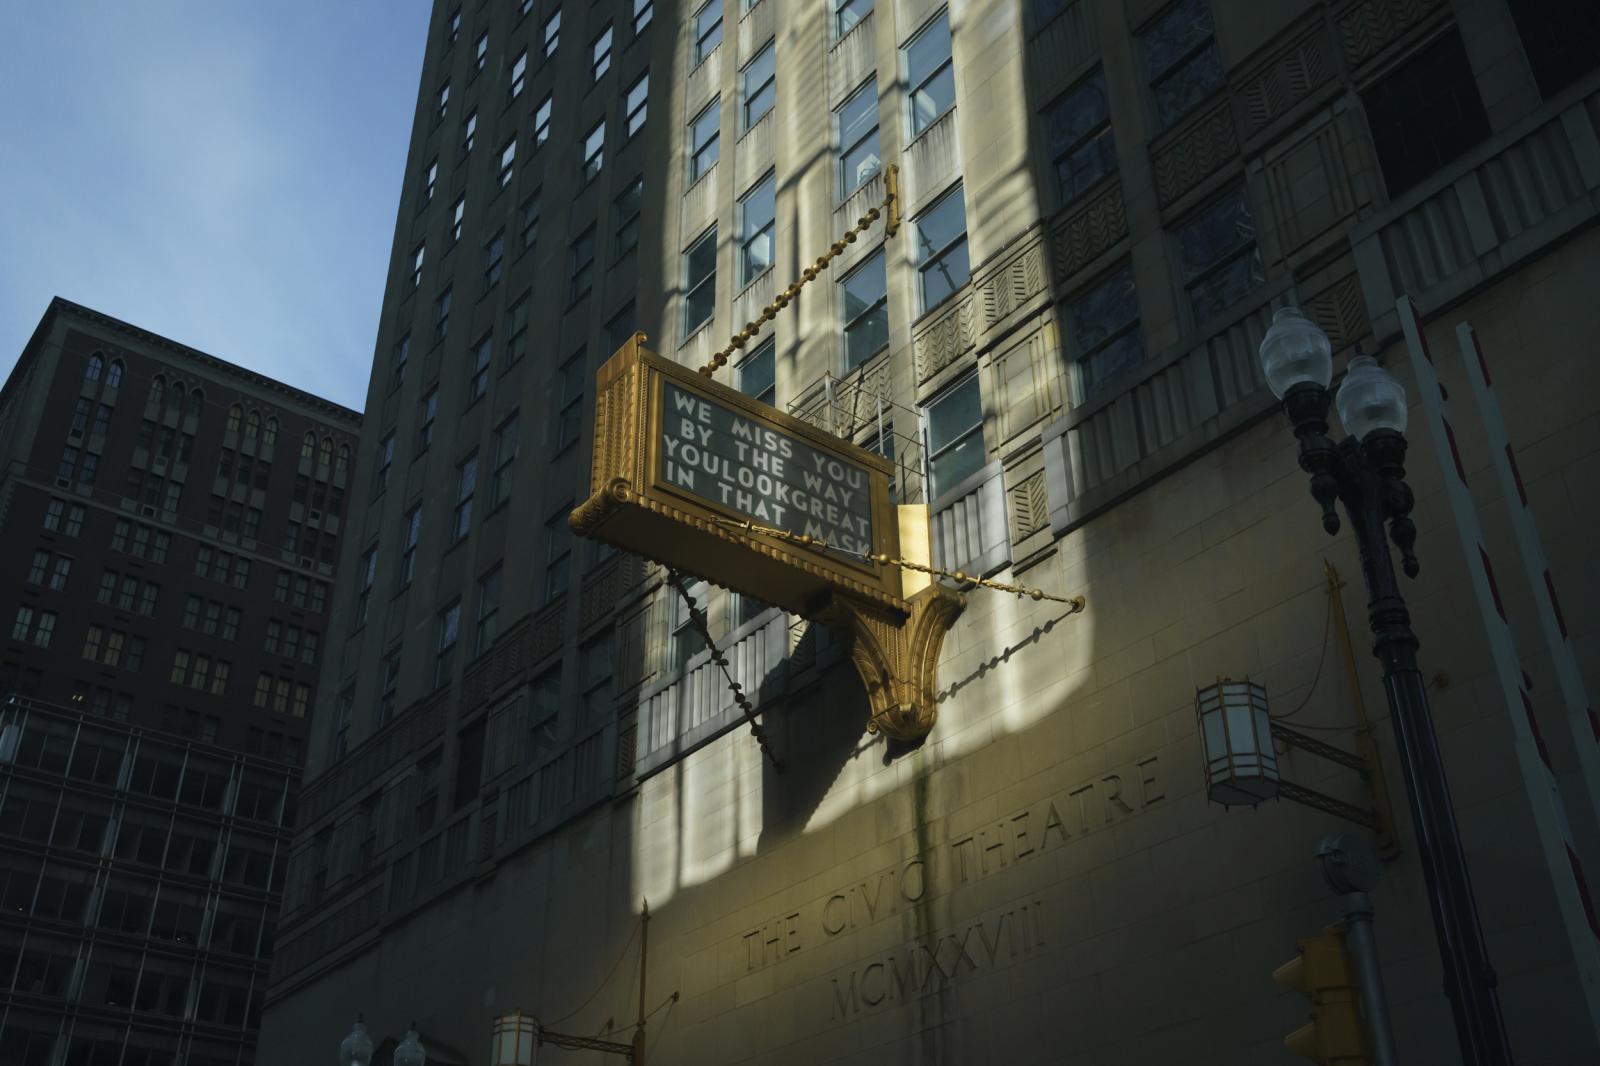 Image from Portfolio - A beam of sunlight through buildings illuminates a sign...